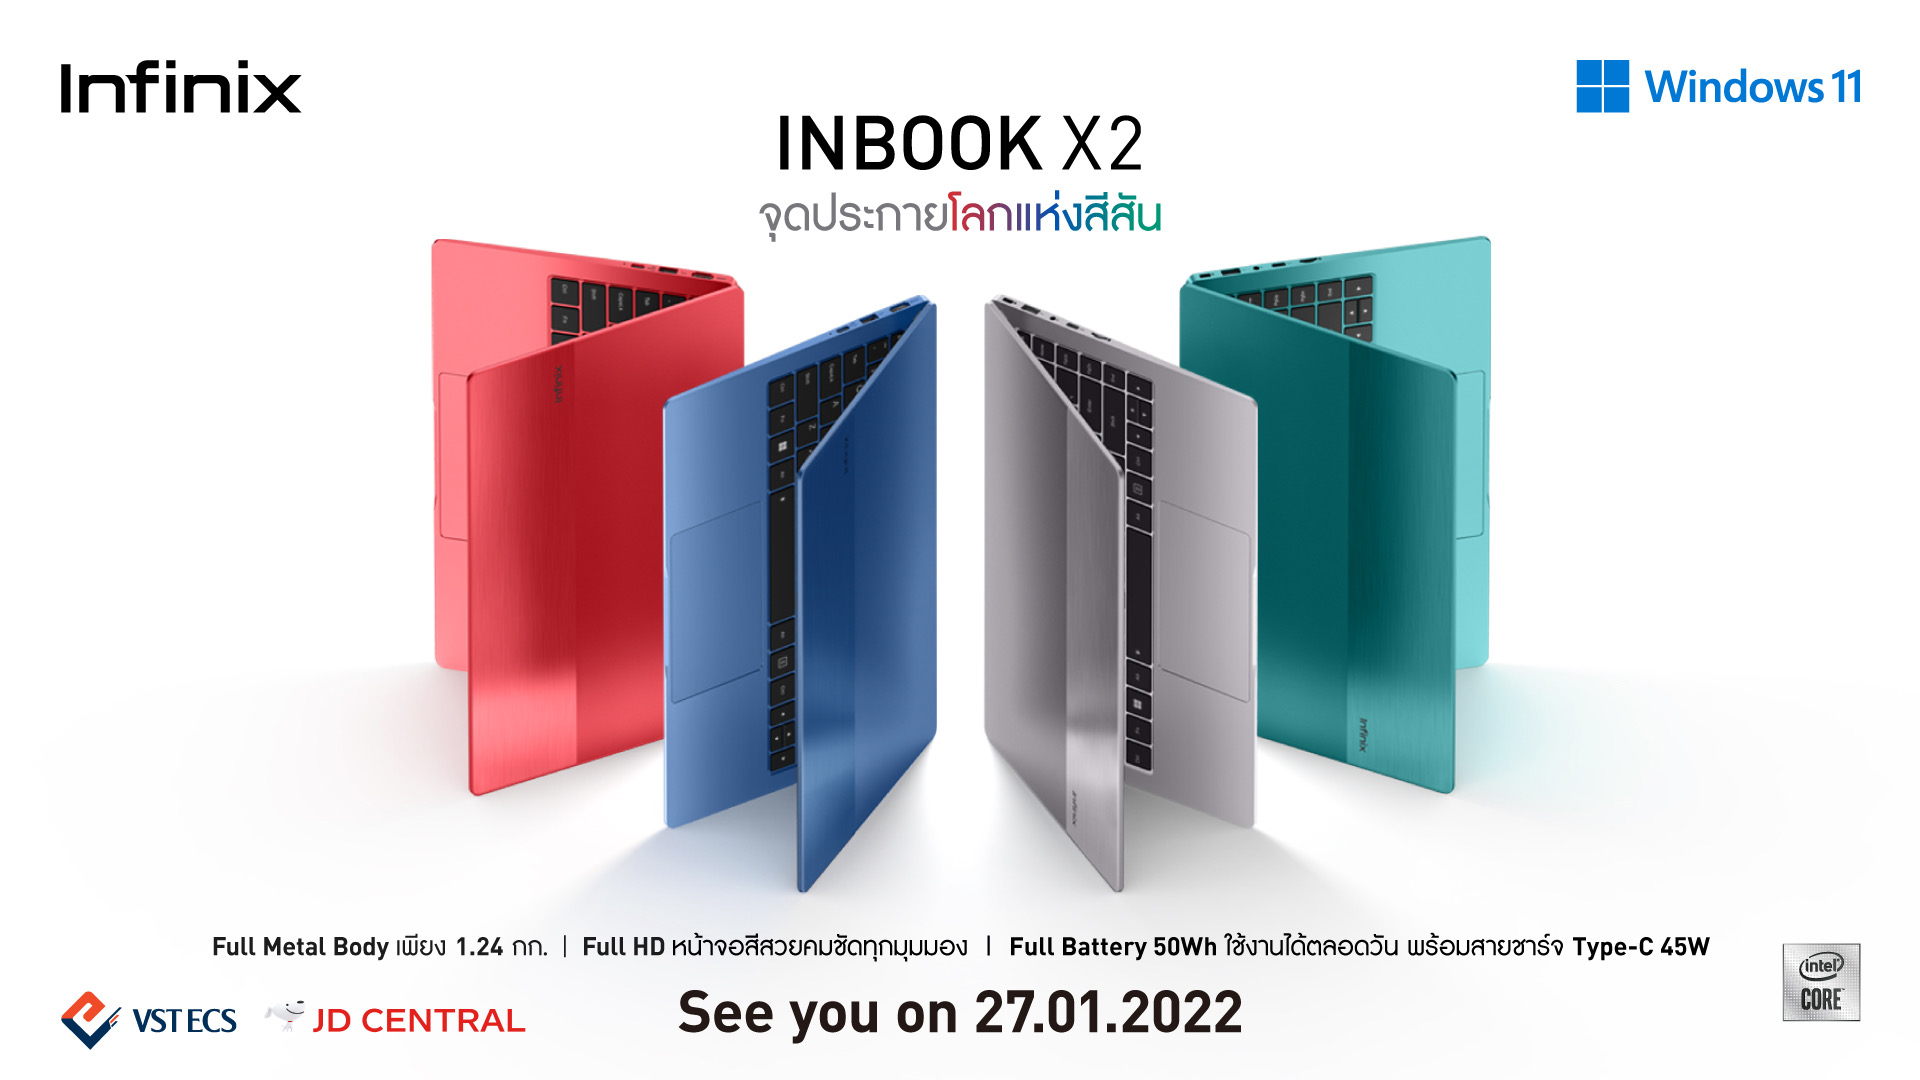 Infinix เตรียมเปิดตัวโน้ตบุ๊กรุ่นใหม่ INBOOK X2 ดีไซน์บางเบา หน้าจอสีสันสดใส ตอบโจทย์ทุกการใช้งาน  พร้อมเปิดราคาวันที่ 27 ม.ค นี้  